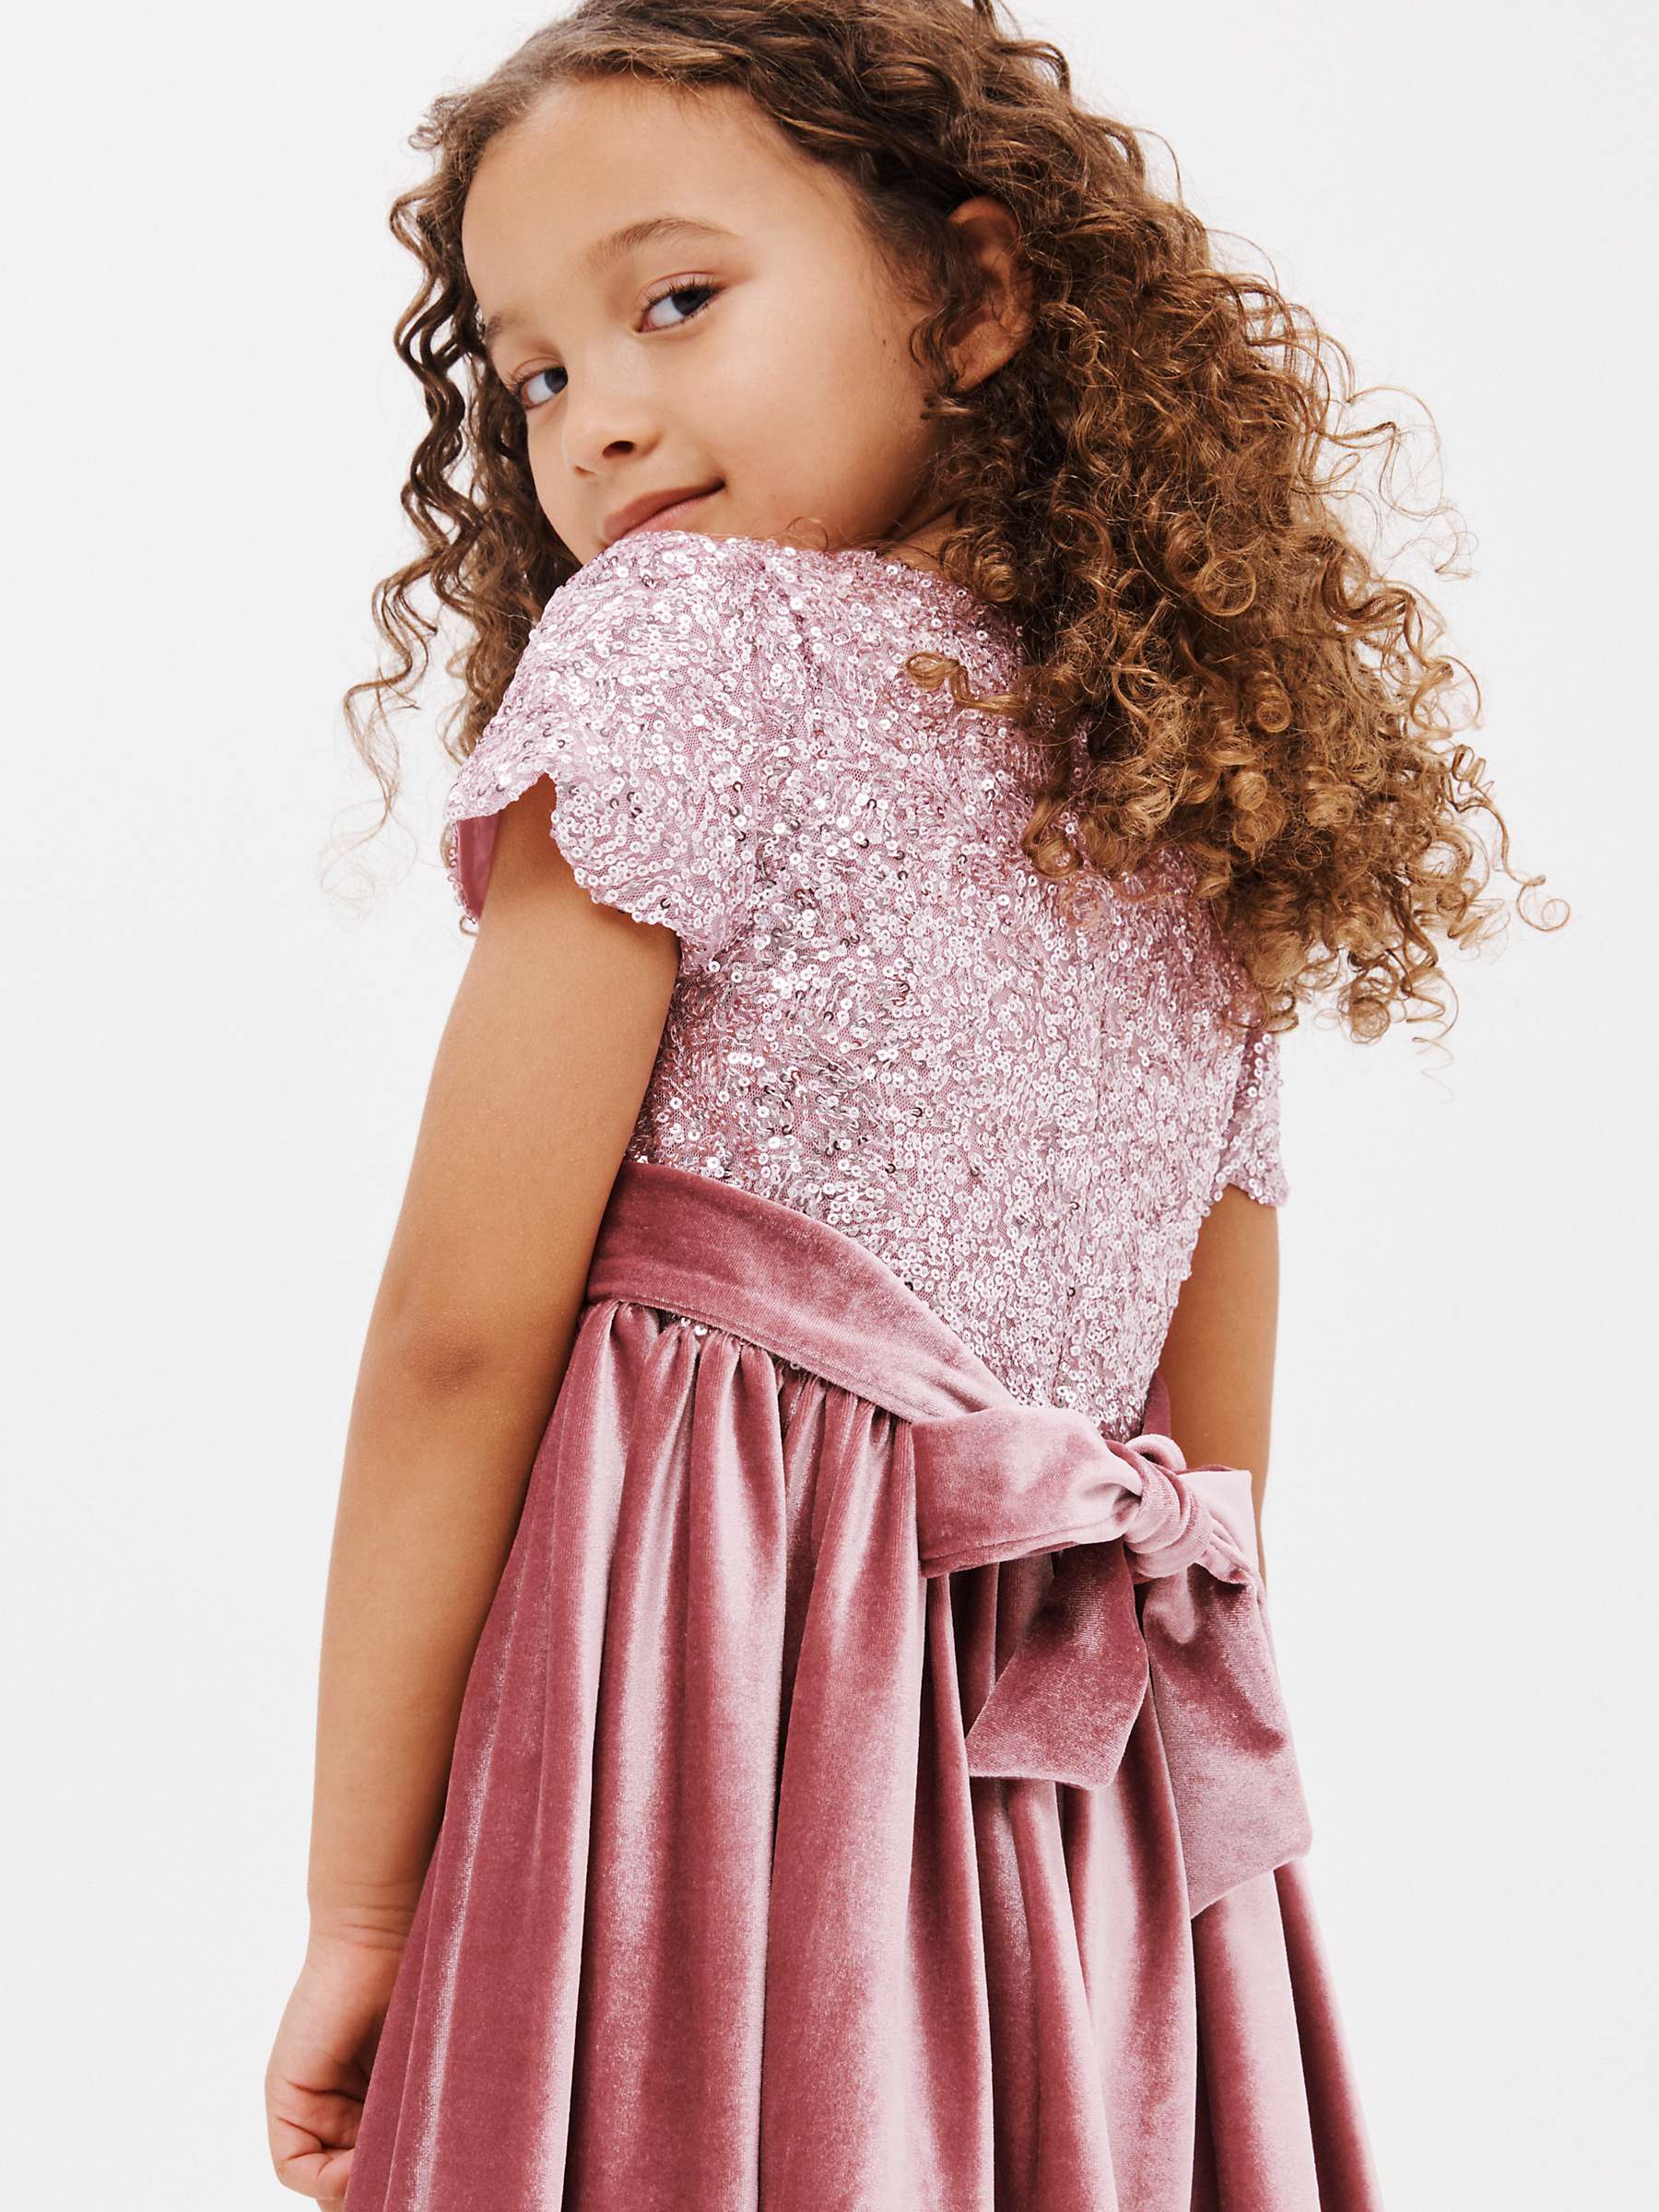 Buy John Lewis Heirloom Collection Kids' Sequin Velour Party Dress Online at johnlewis.com